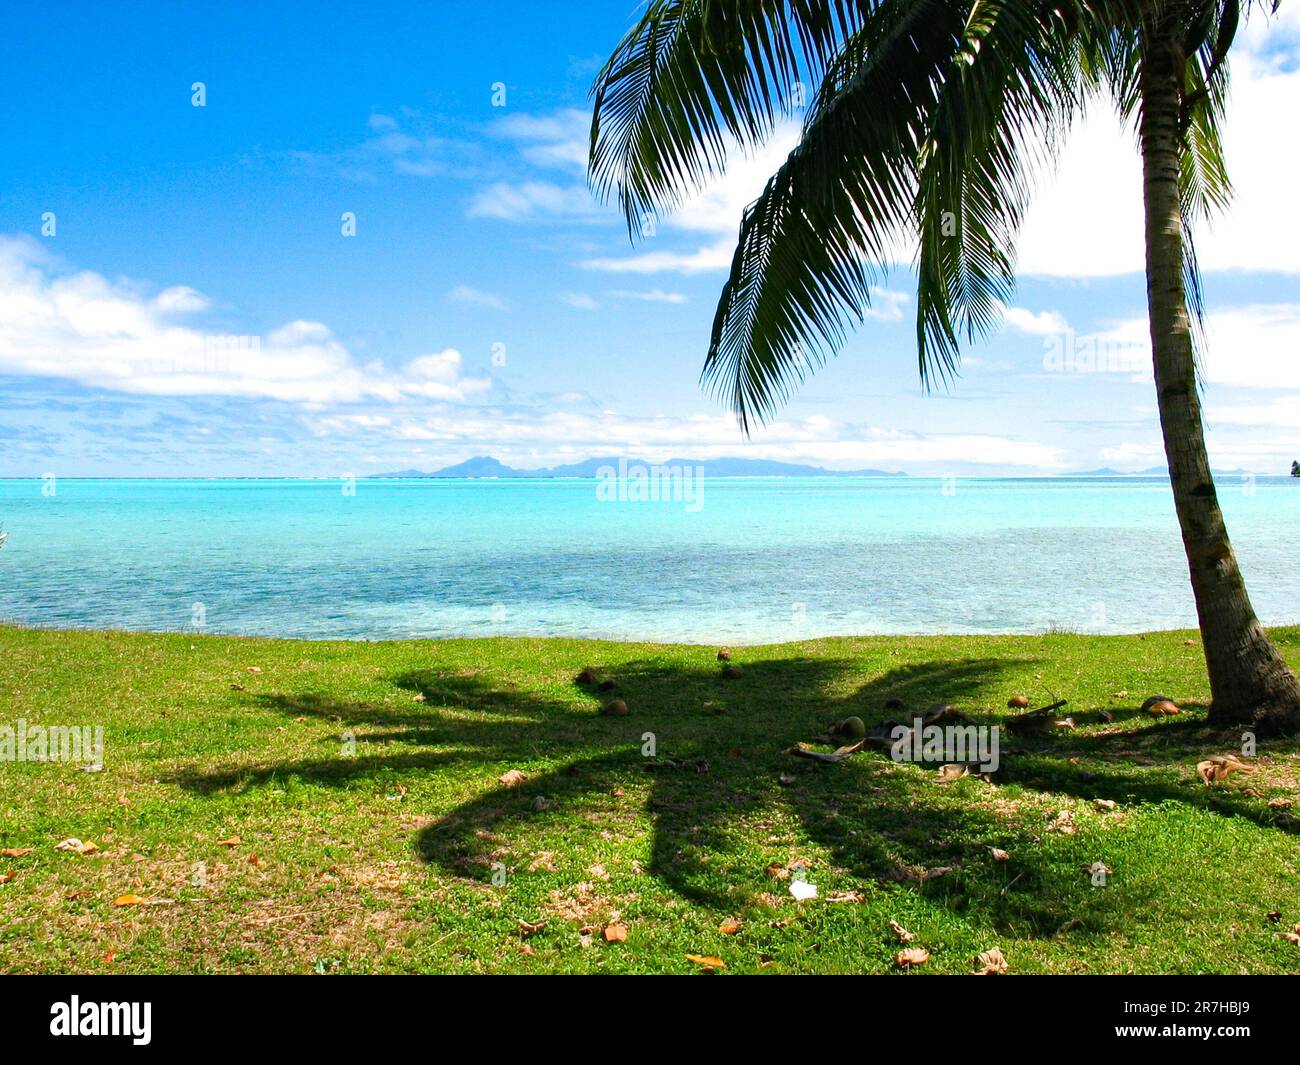 View of Raiatea and Tahaa (Ra'iatea and Taha'a) from Huahine, French Polynesia: coconut palm shade, blue lagoon and islands on the horizon. Stock Photo